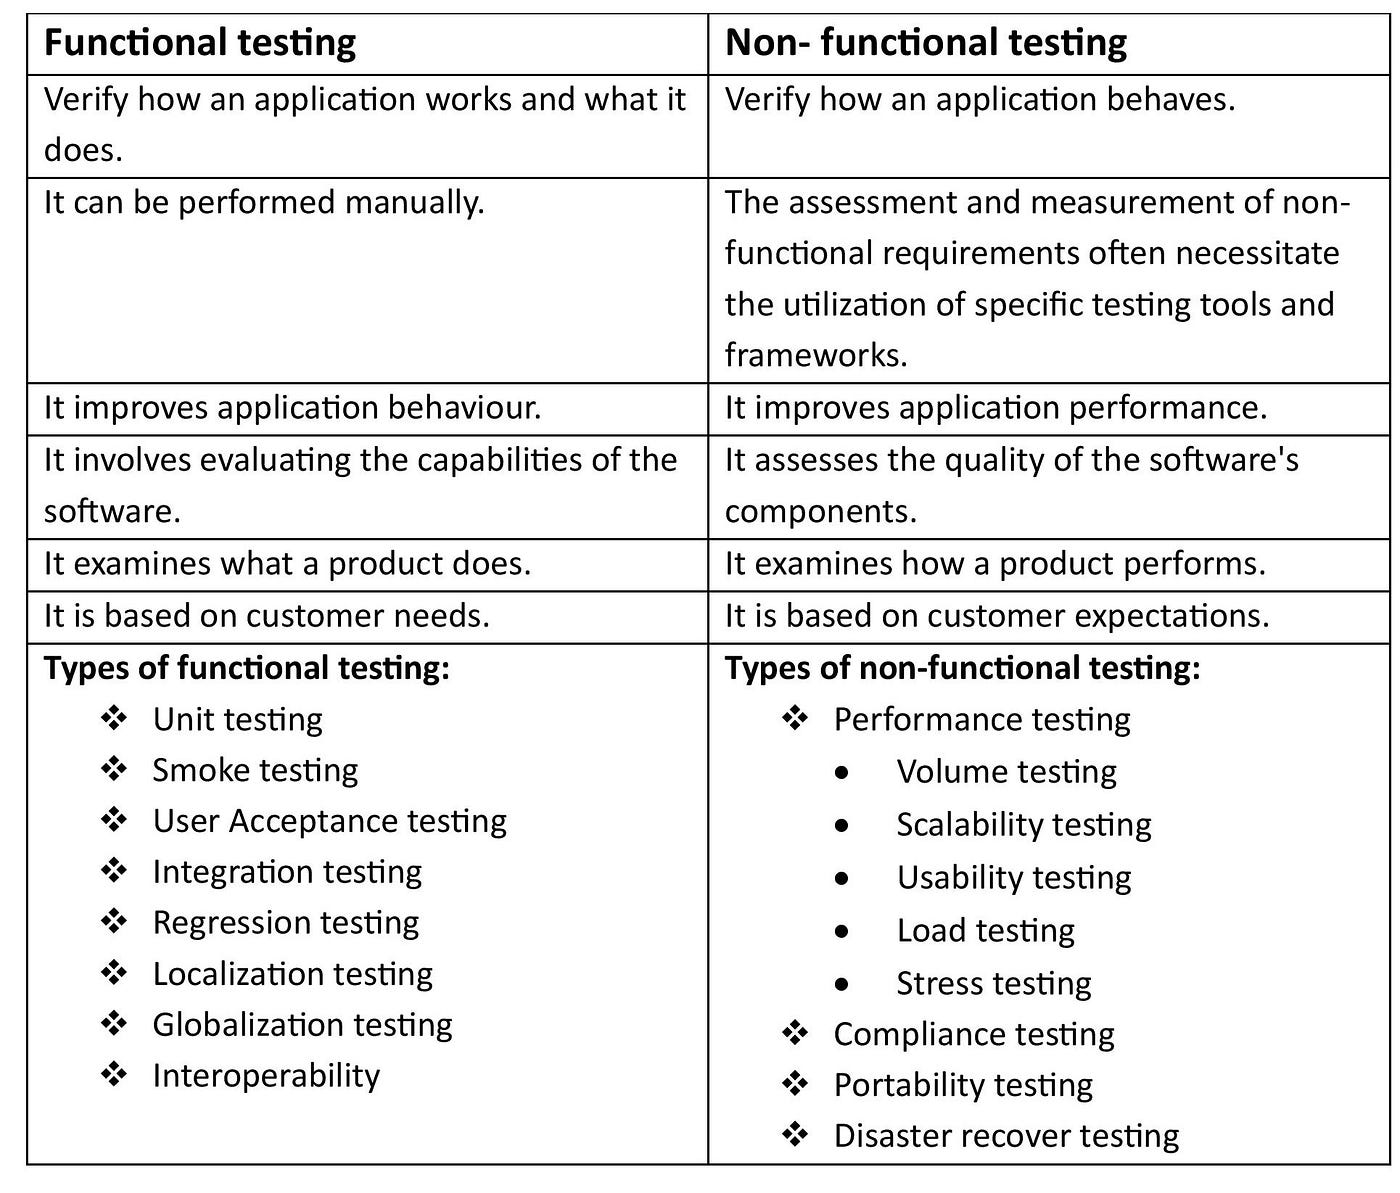 Functional Vs Non-Functional Testing, by Anbarasi Chinnasamy